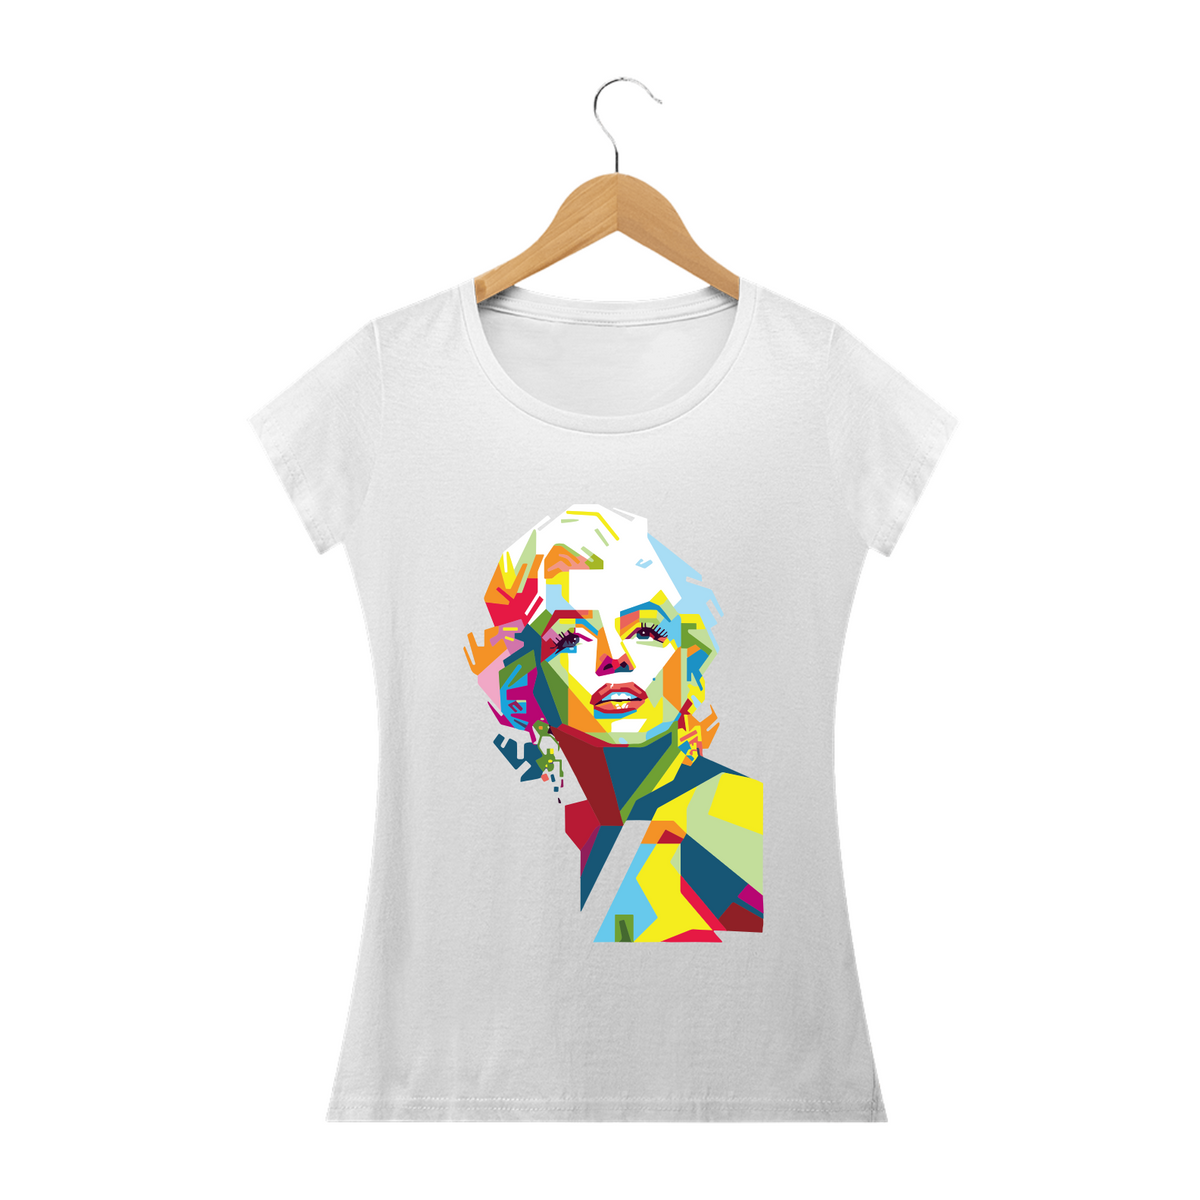 Nome do produto: MARILYN MONROE MONDRIAN - Camiseta Personalizada com Pop Art